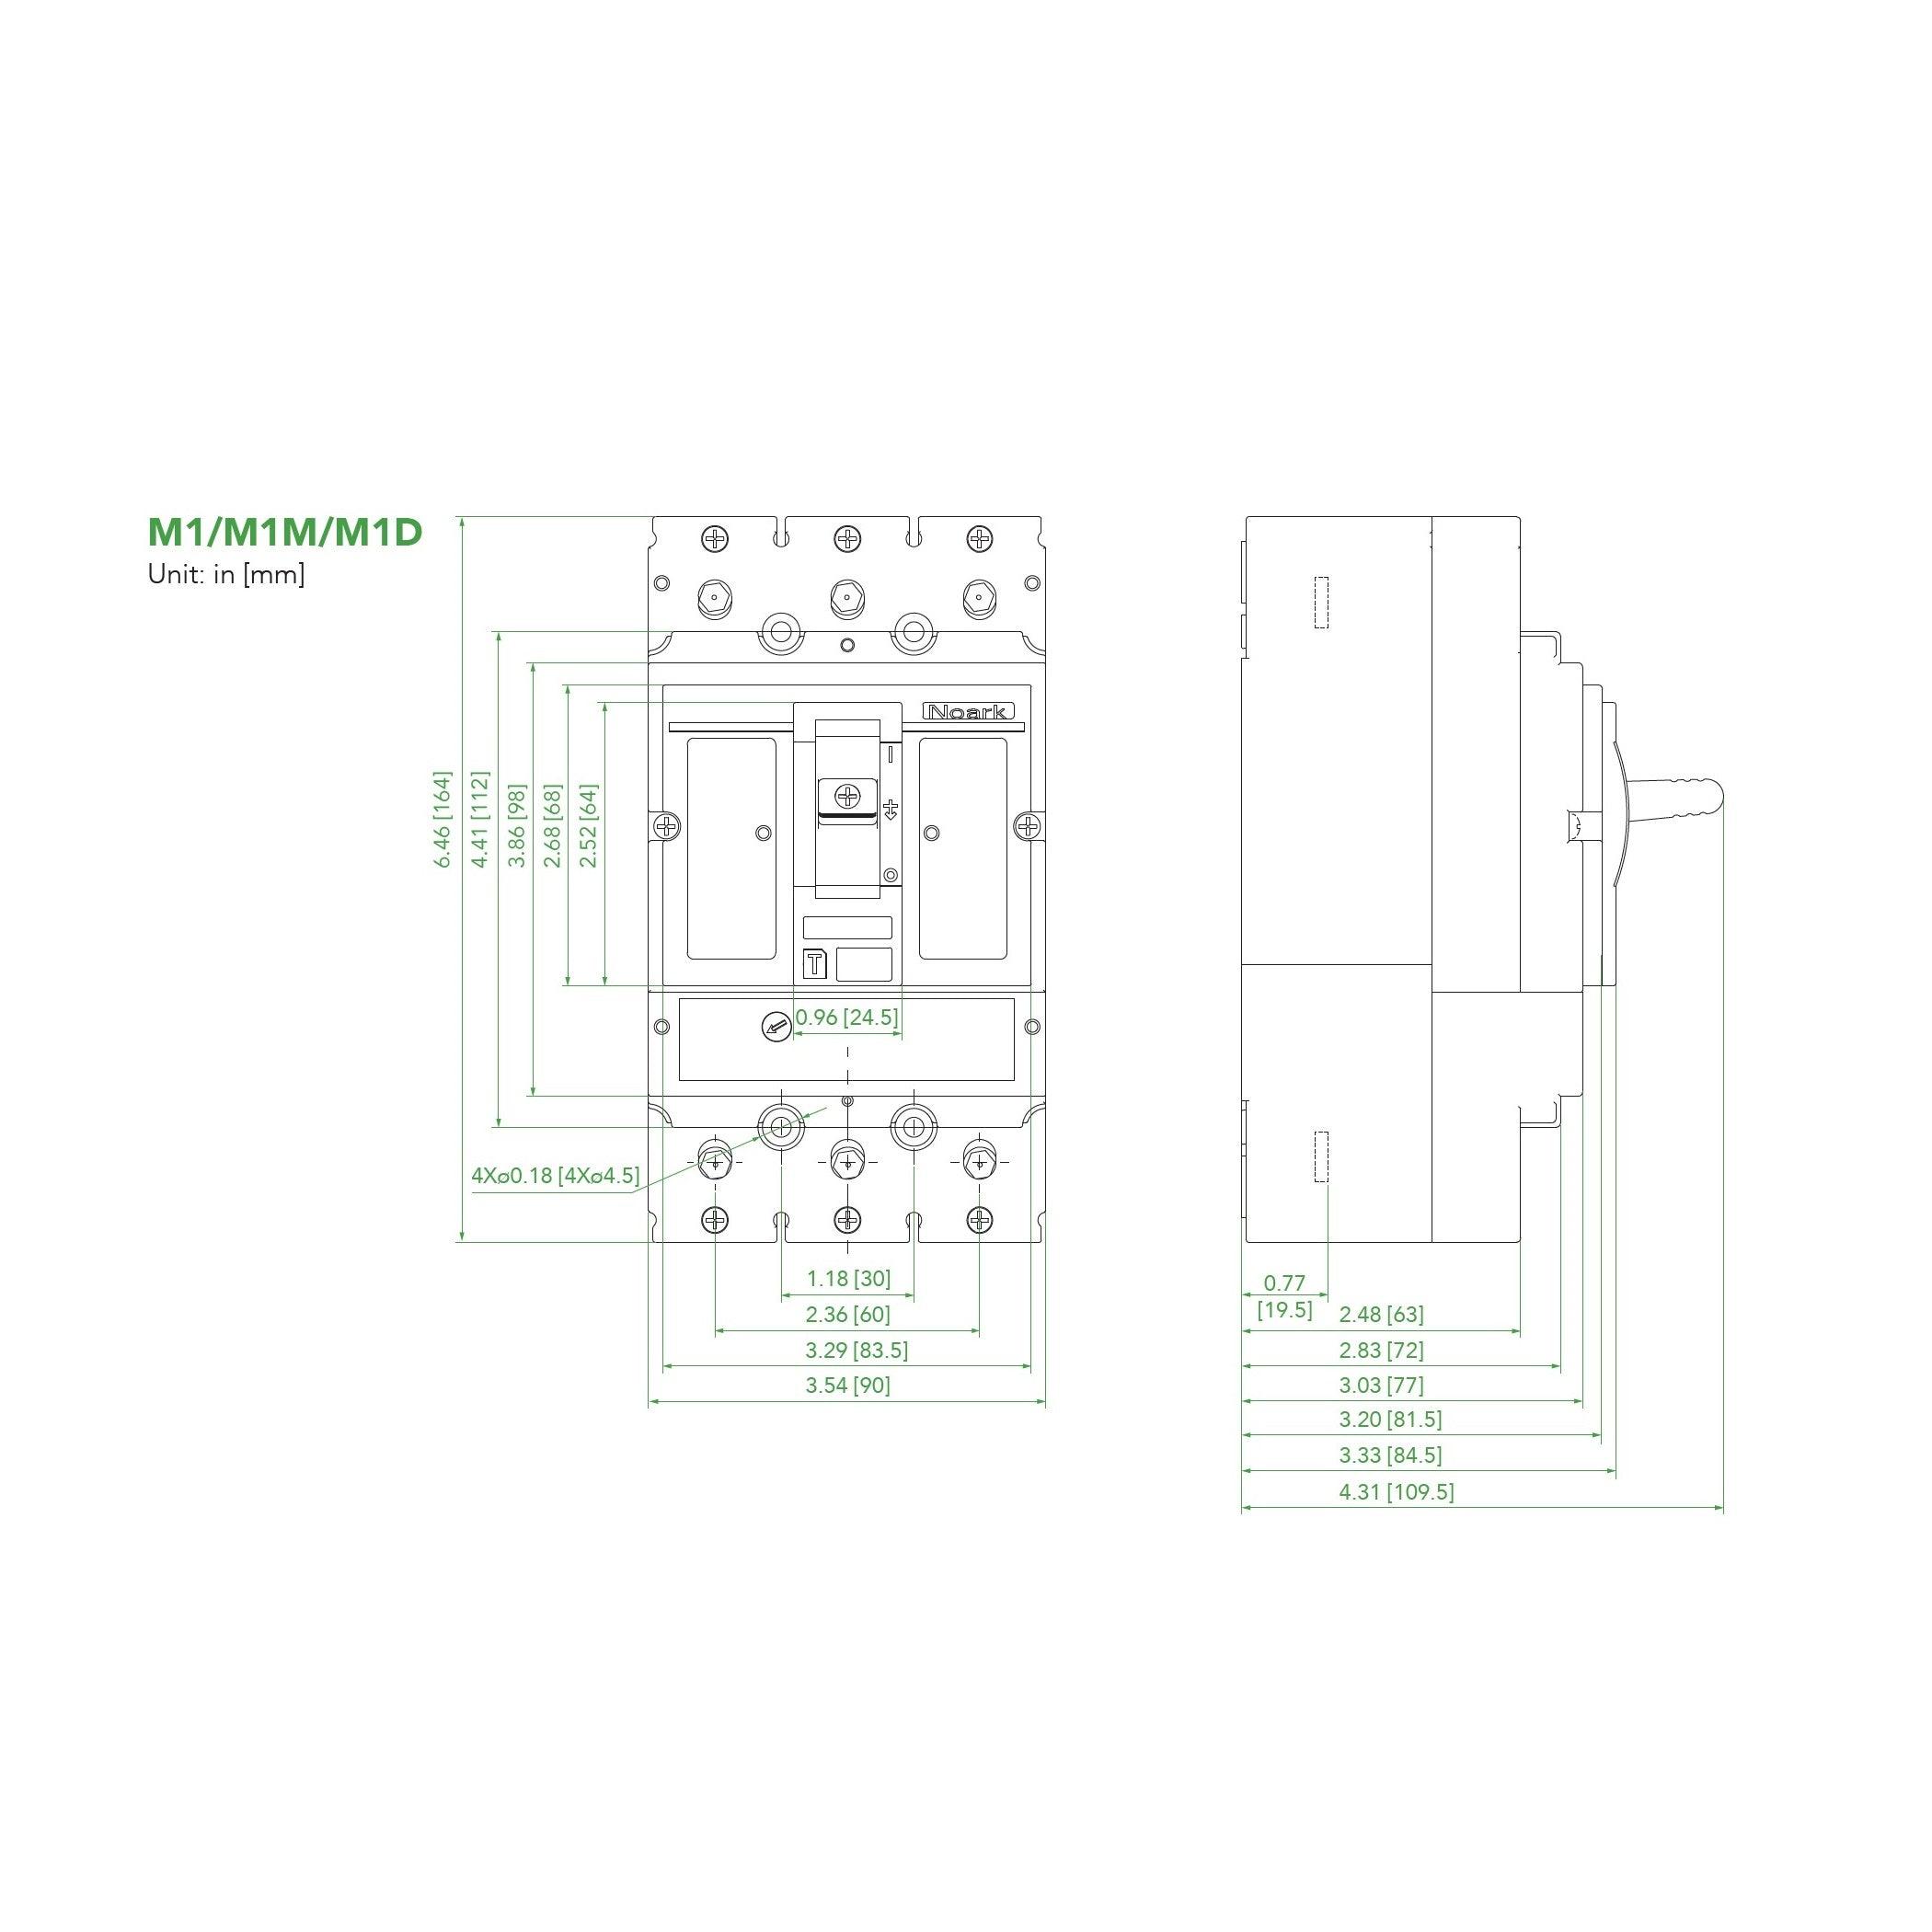 NOARK® Molded Case Circuit Breaker 50A, 3P IC Class N | M1N50T3L - Forces Inc